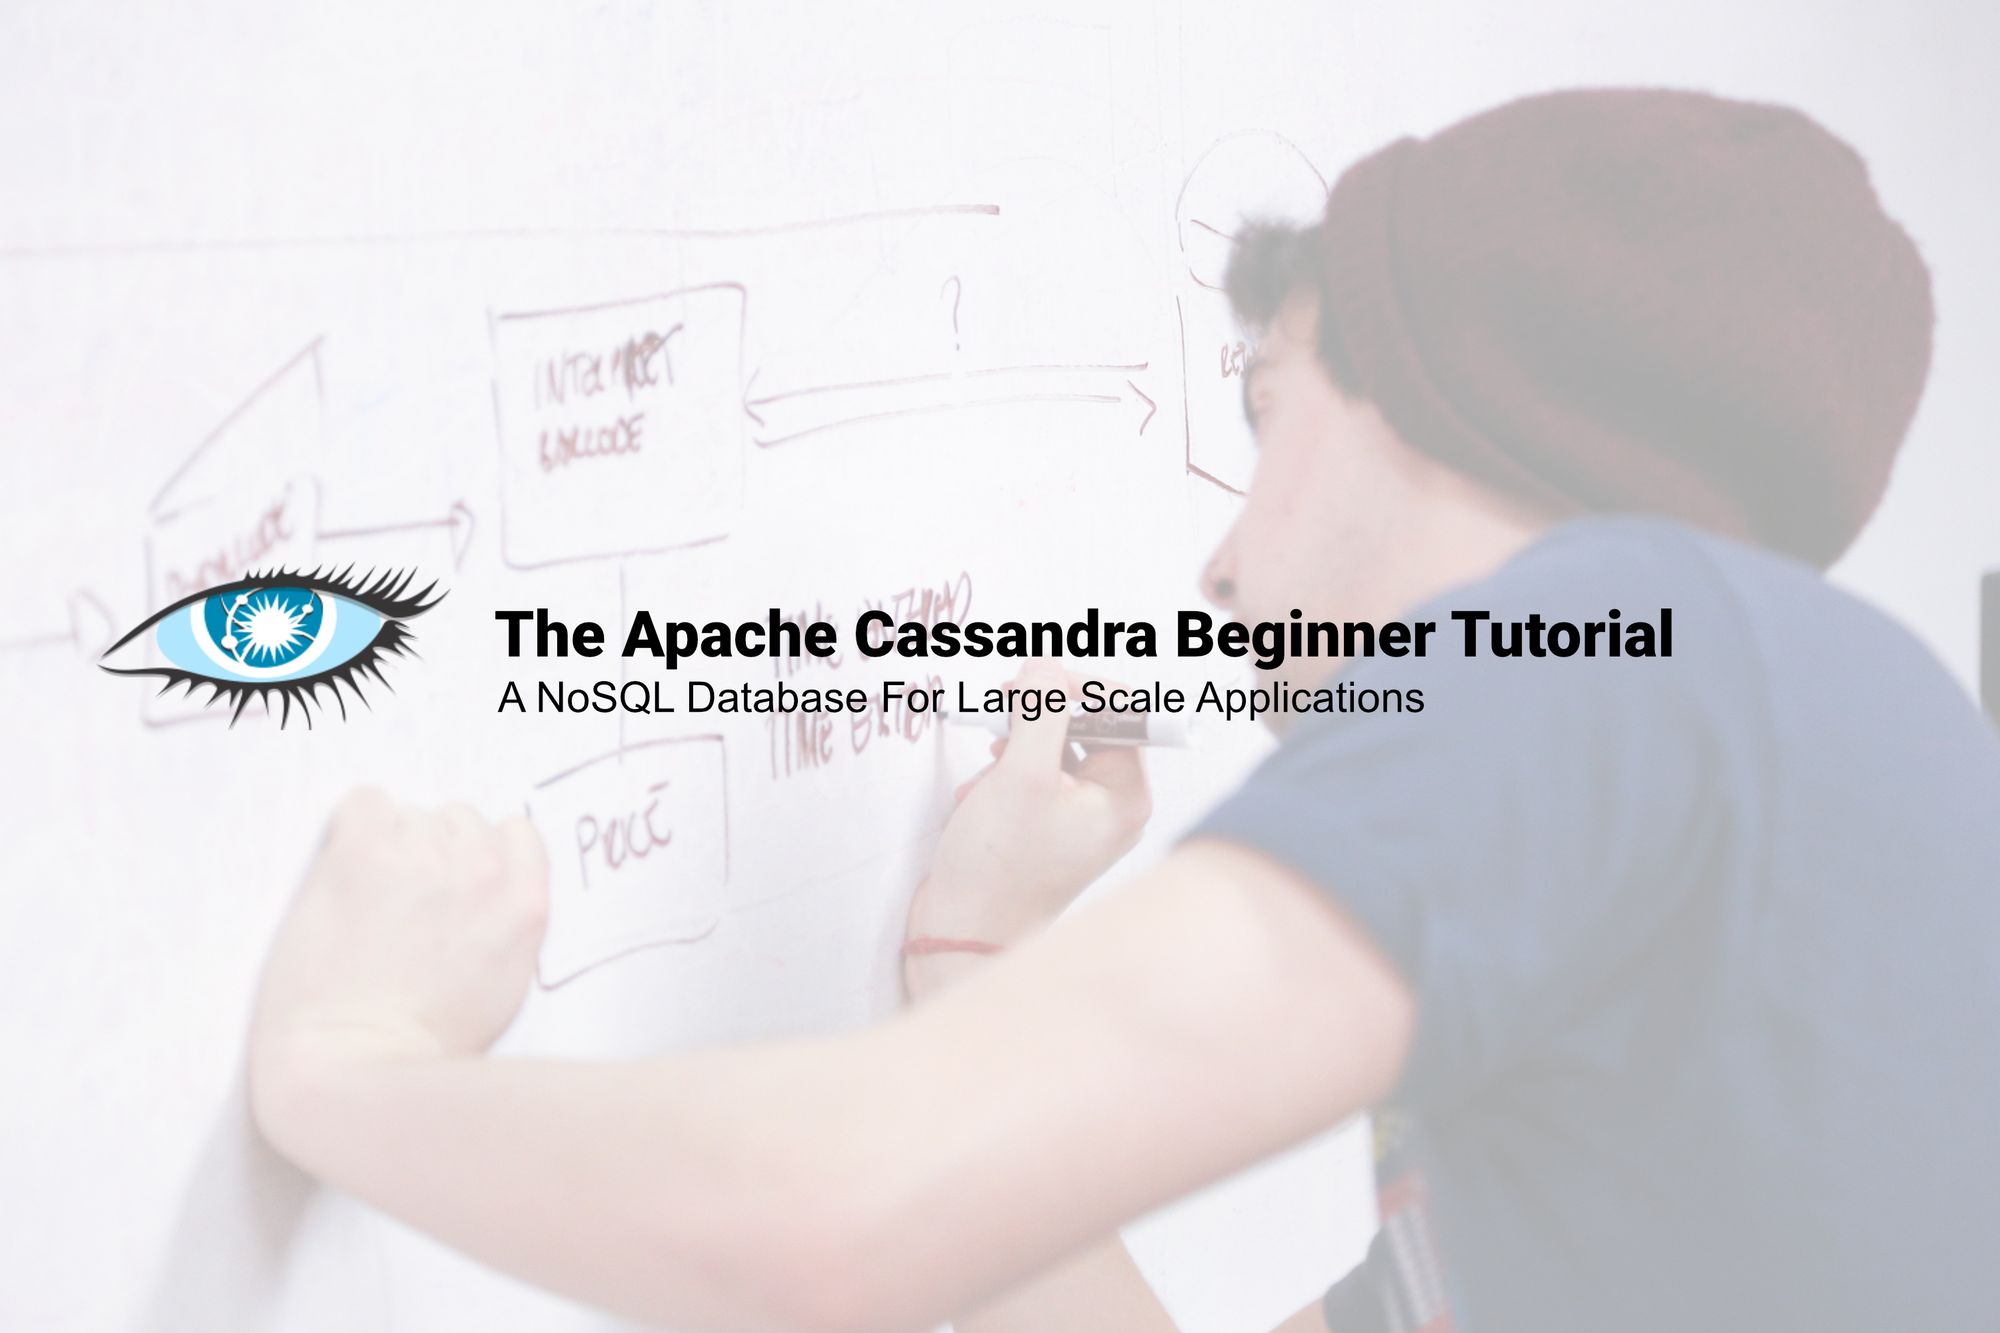 The Apache Cassandra Beginner Tutorial